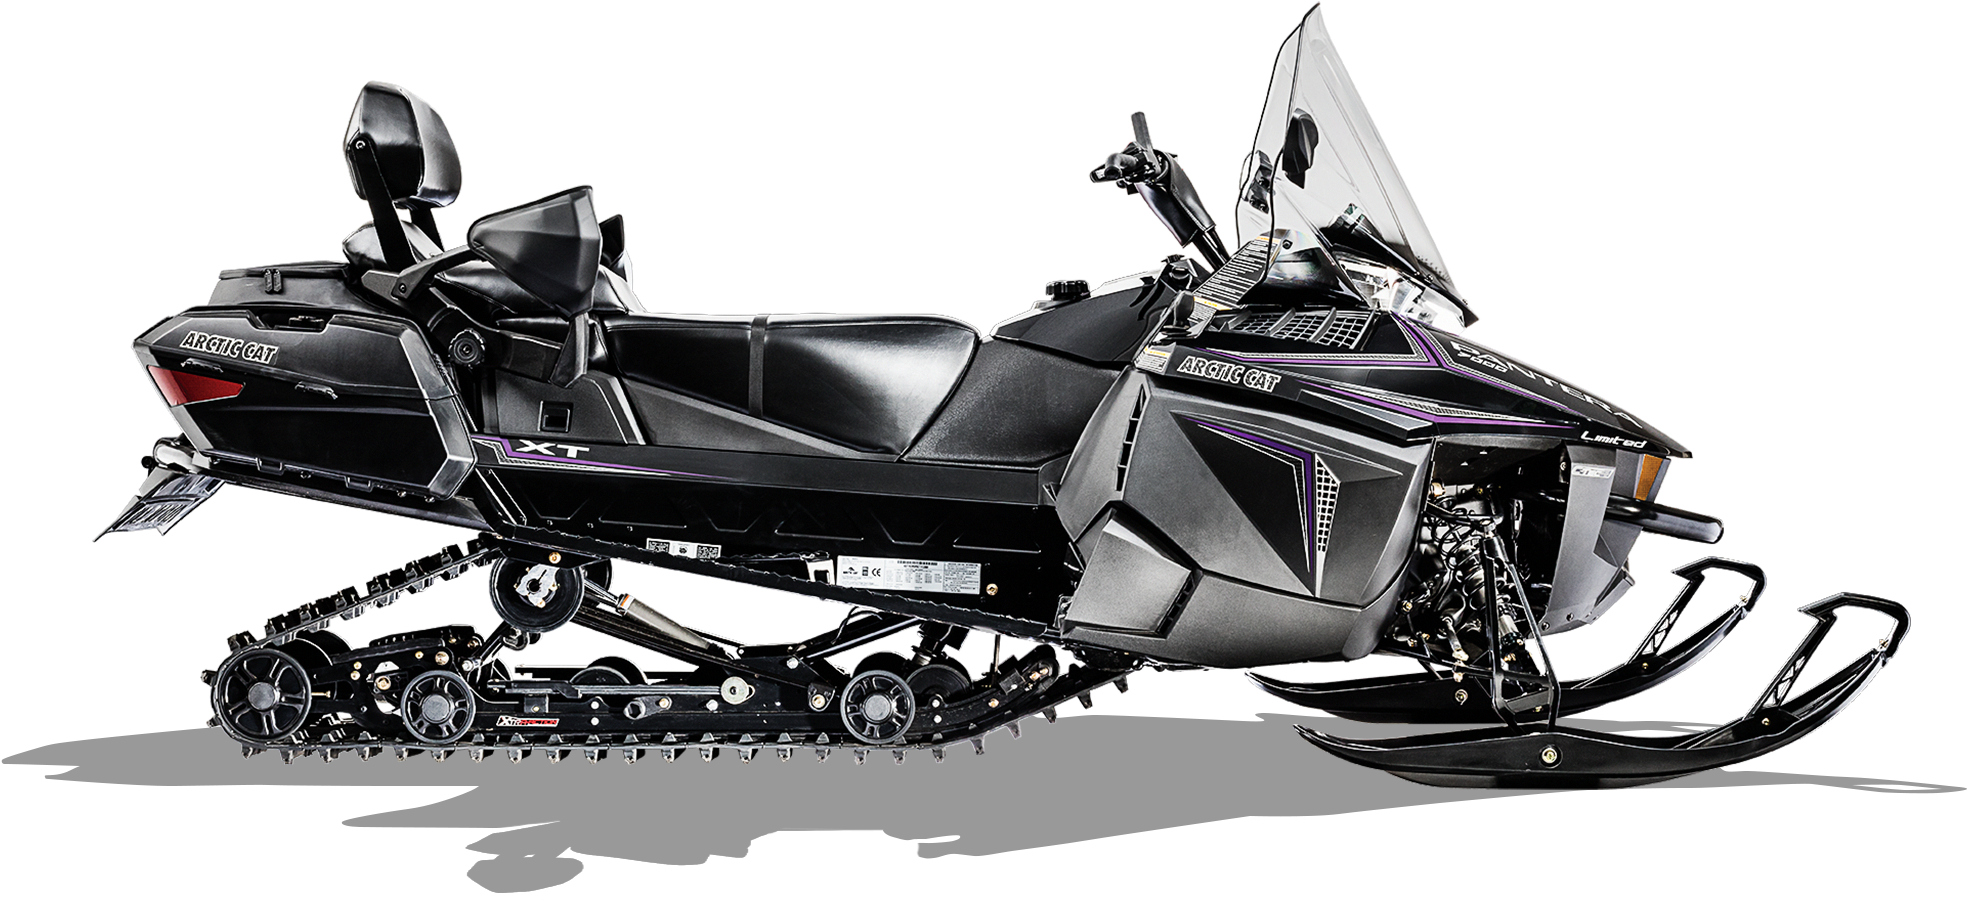 A Black And Purple Snowmobile